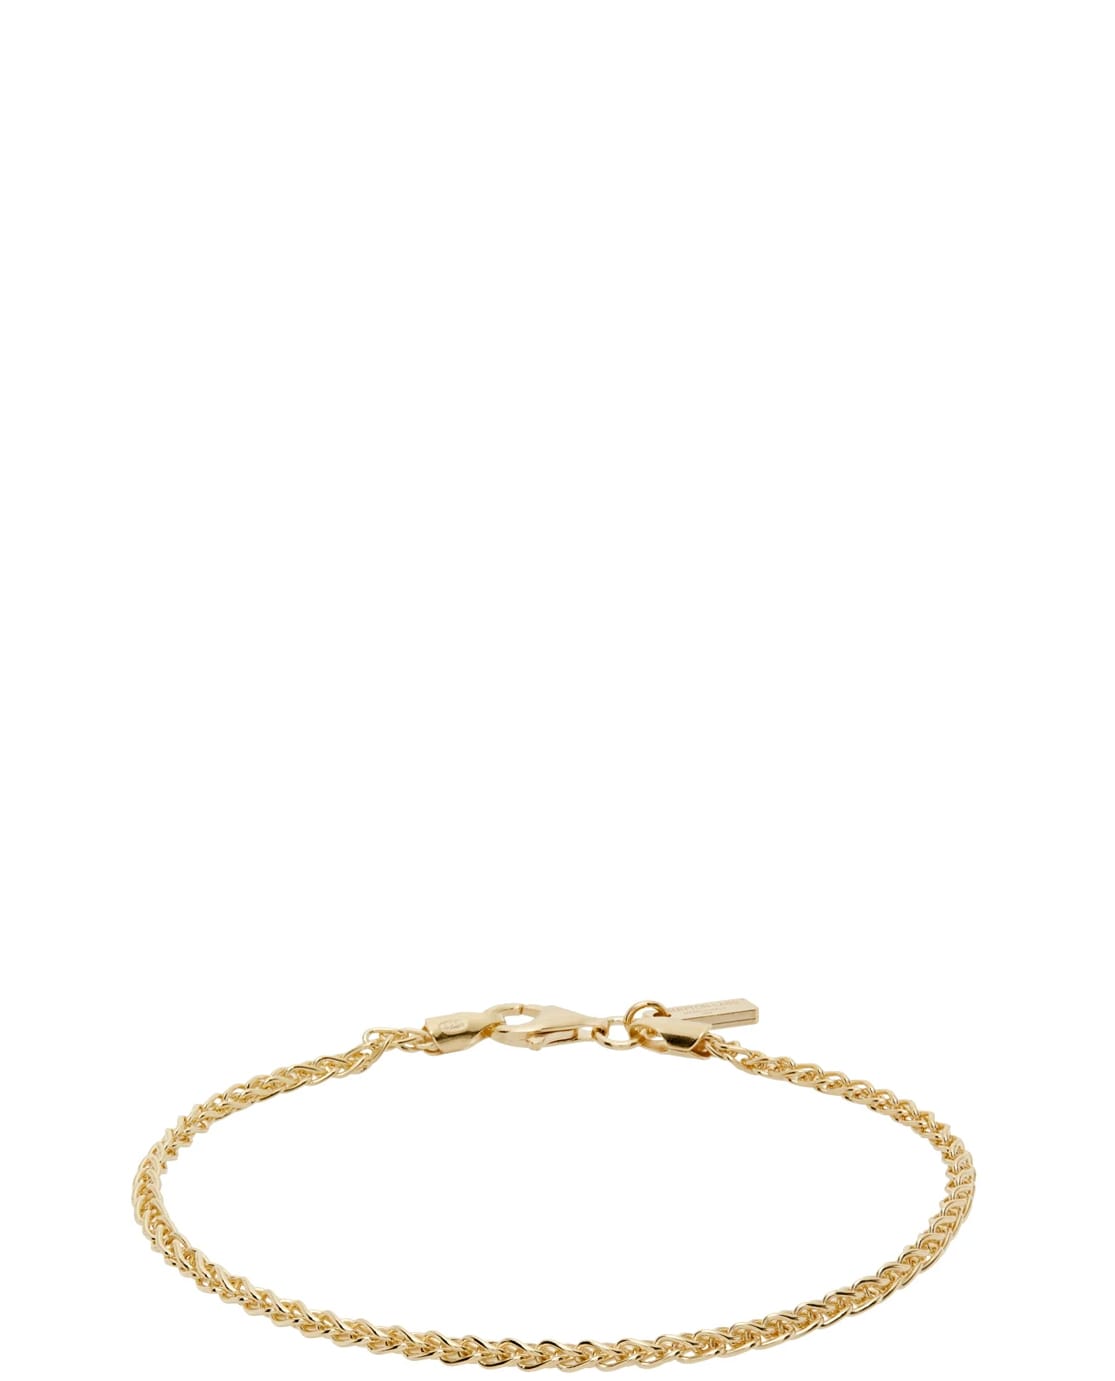 Hatton Labs Gold Rope Bracelet